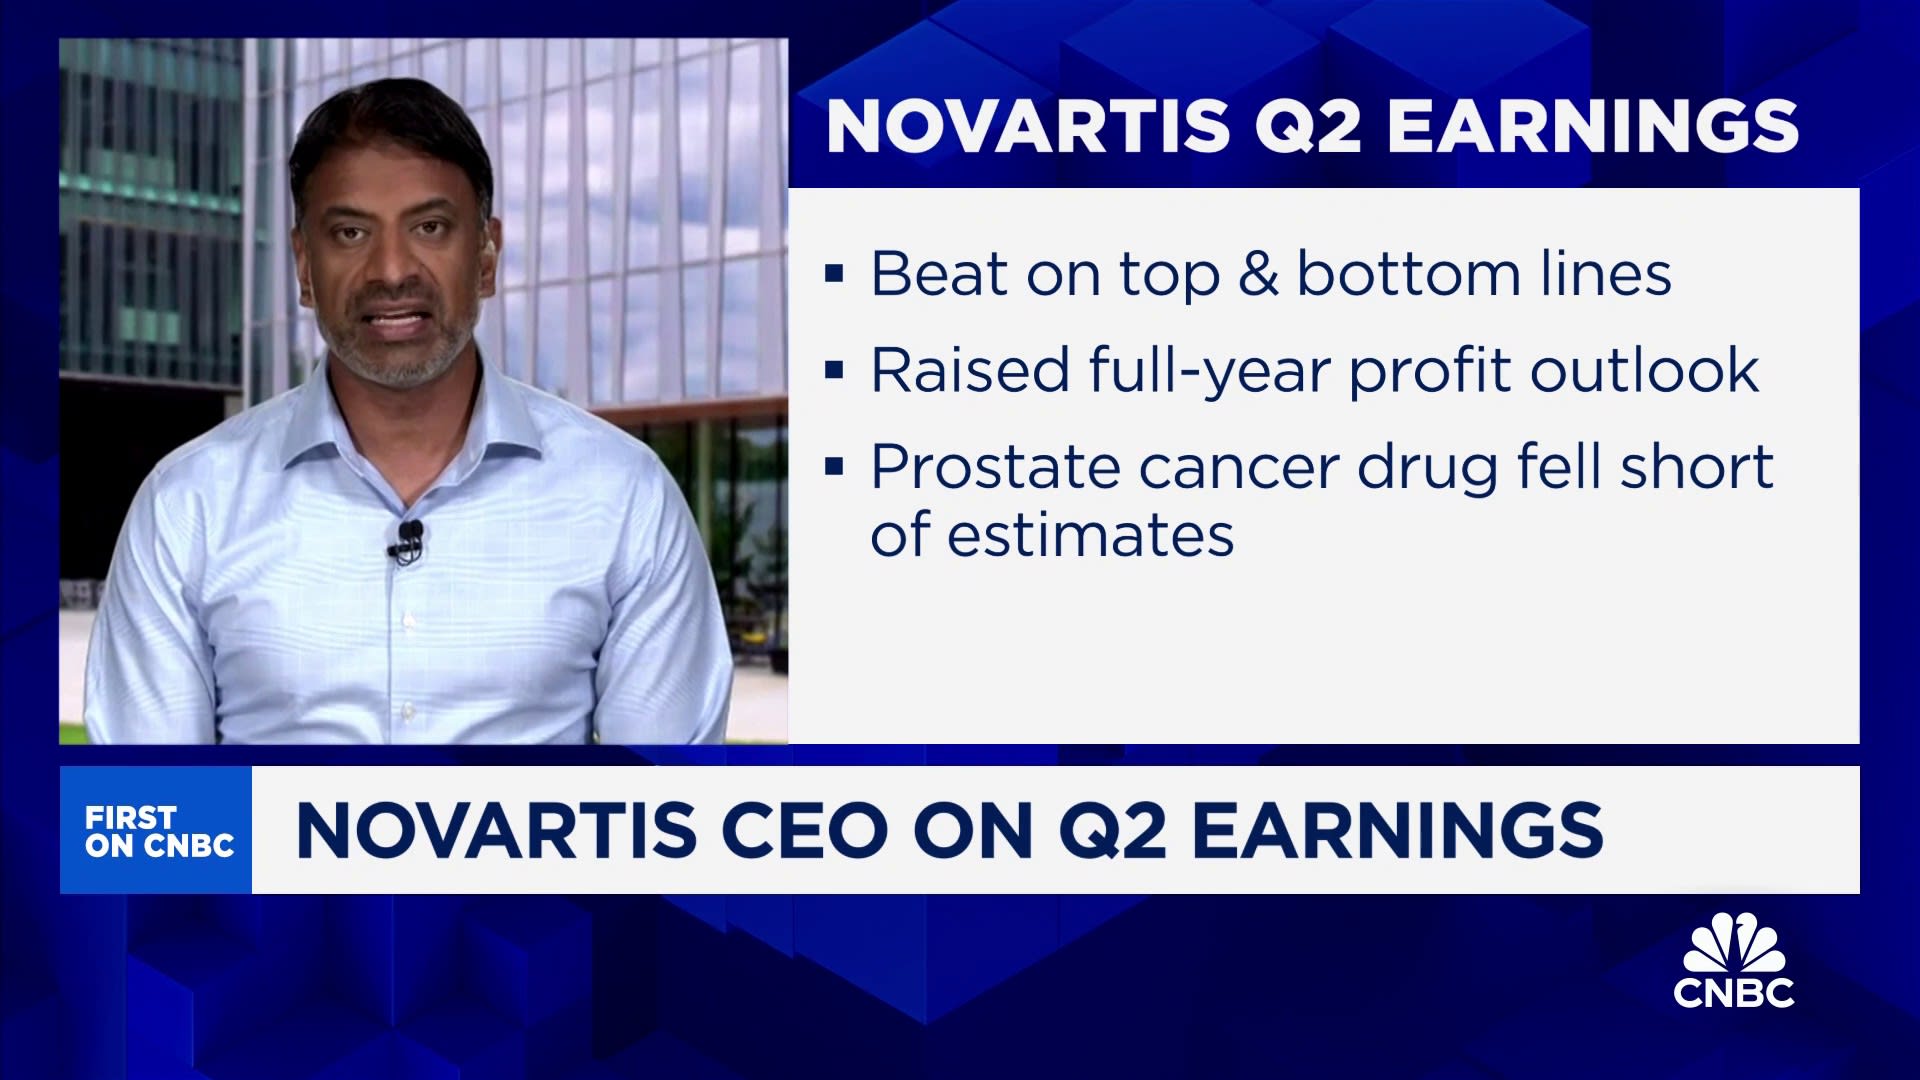 Novartis expects ‘strong momentum’ going into second half, says CEO Vasant Narasimhan [Video]